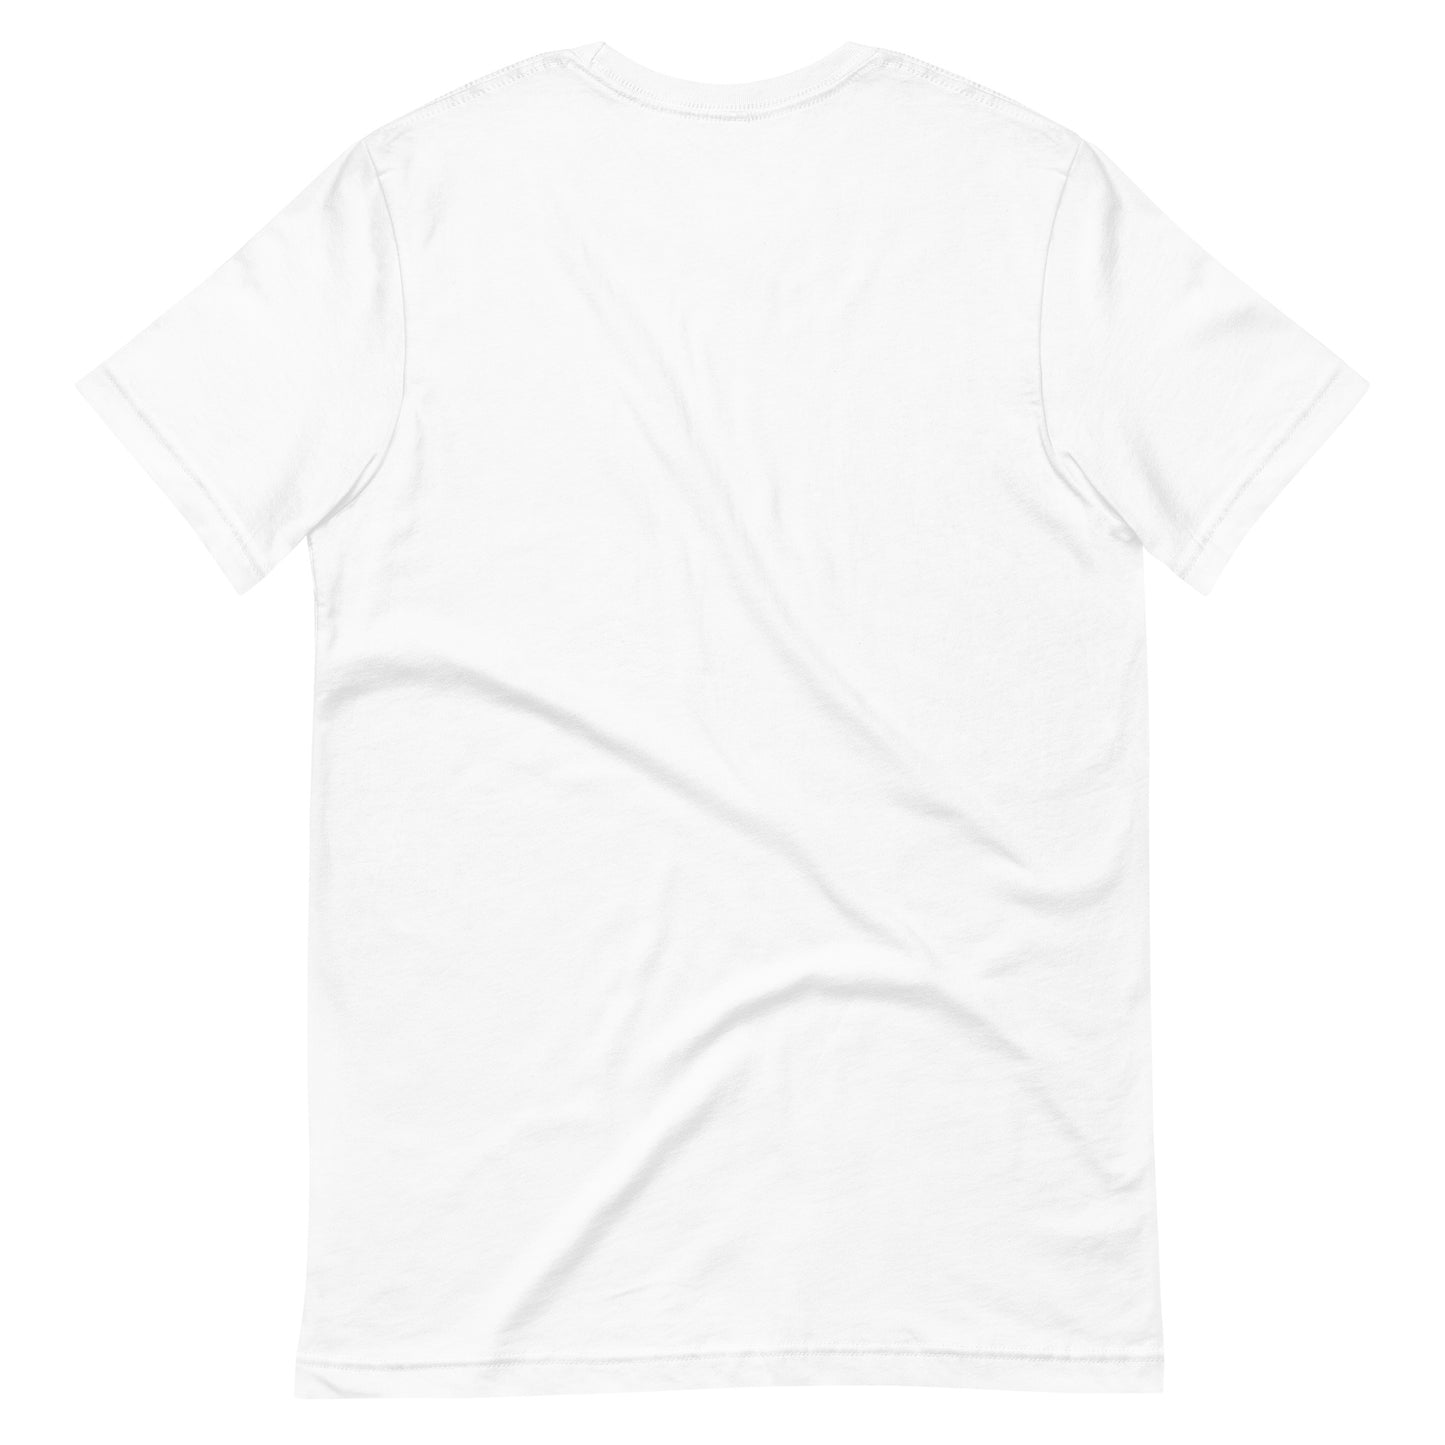 Bloom Unisex T-Shirt